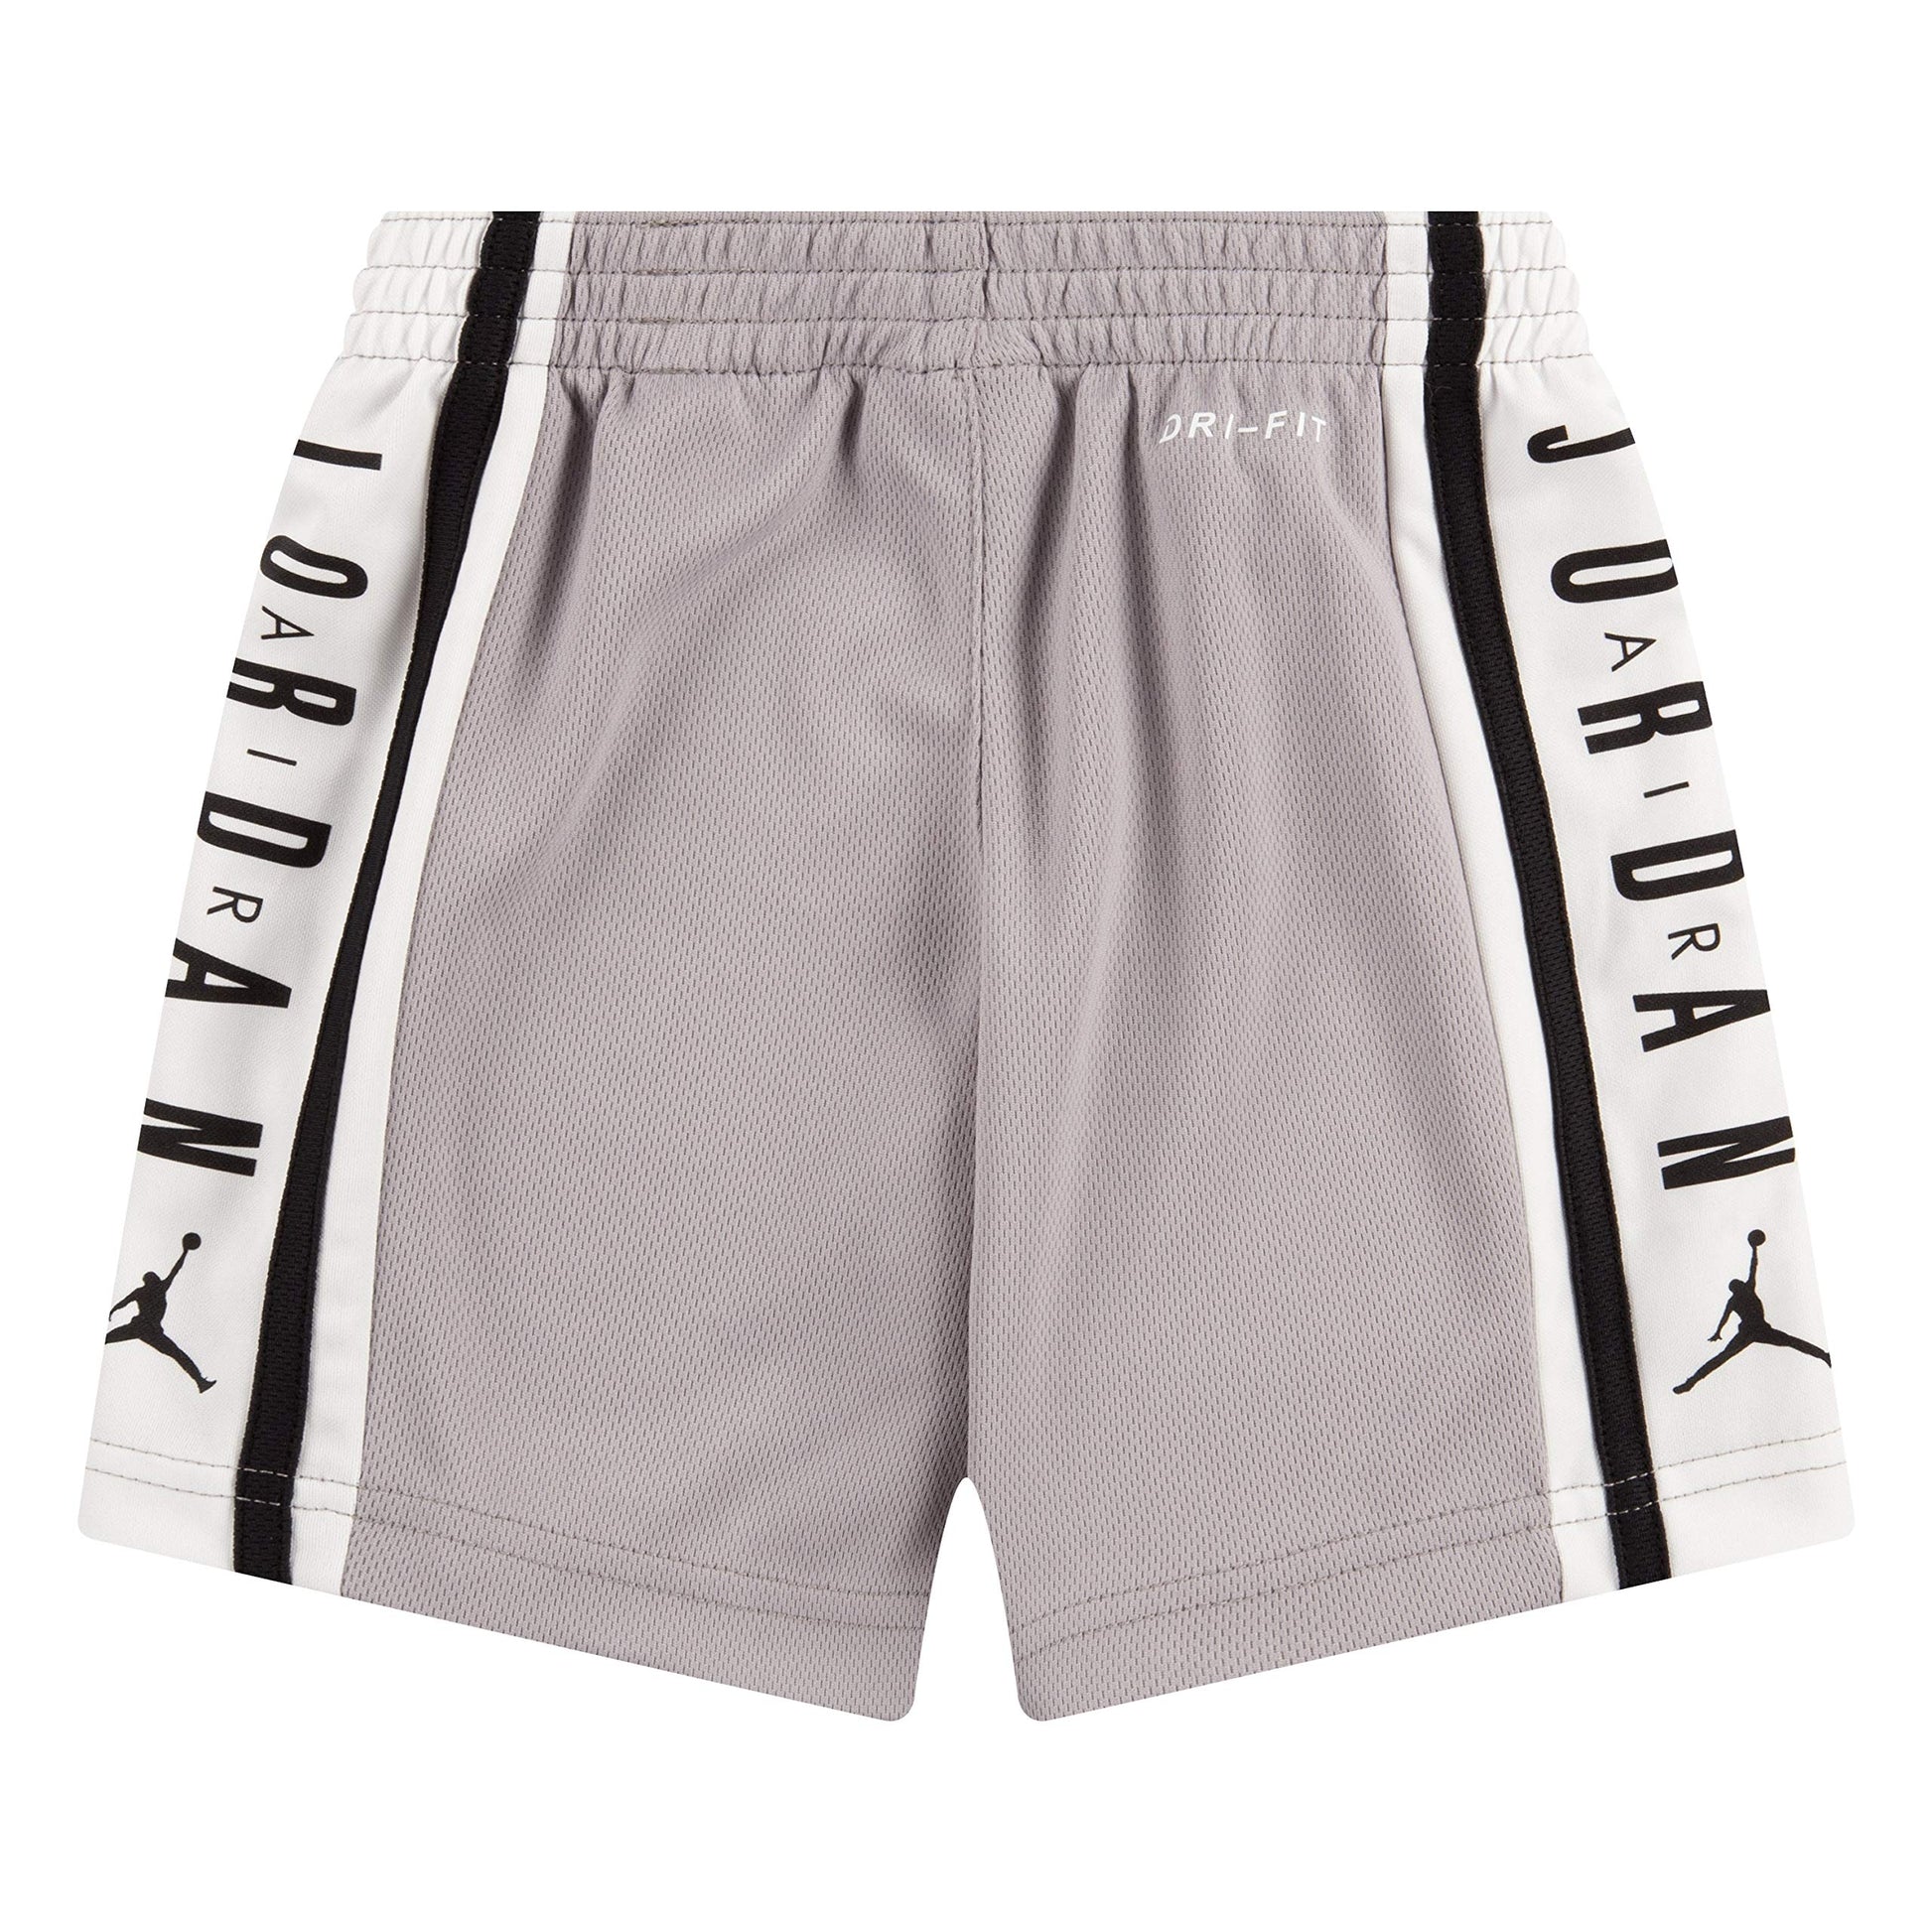 Image 1 of Air Jordan HBR Bball Shorts (Toddler)